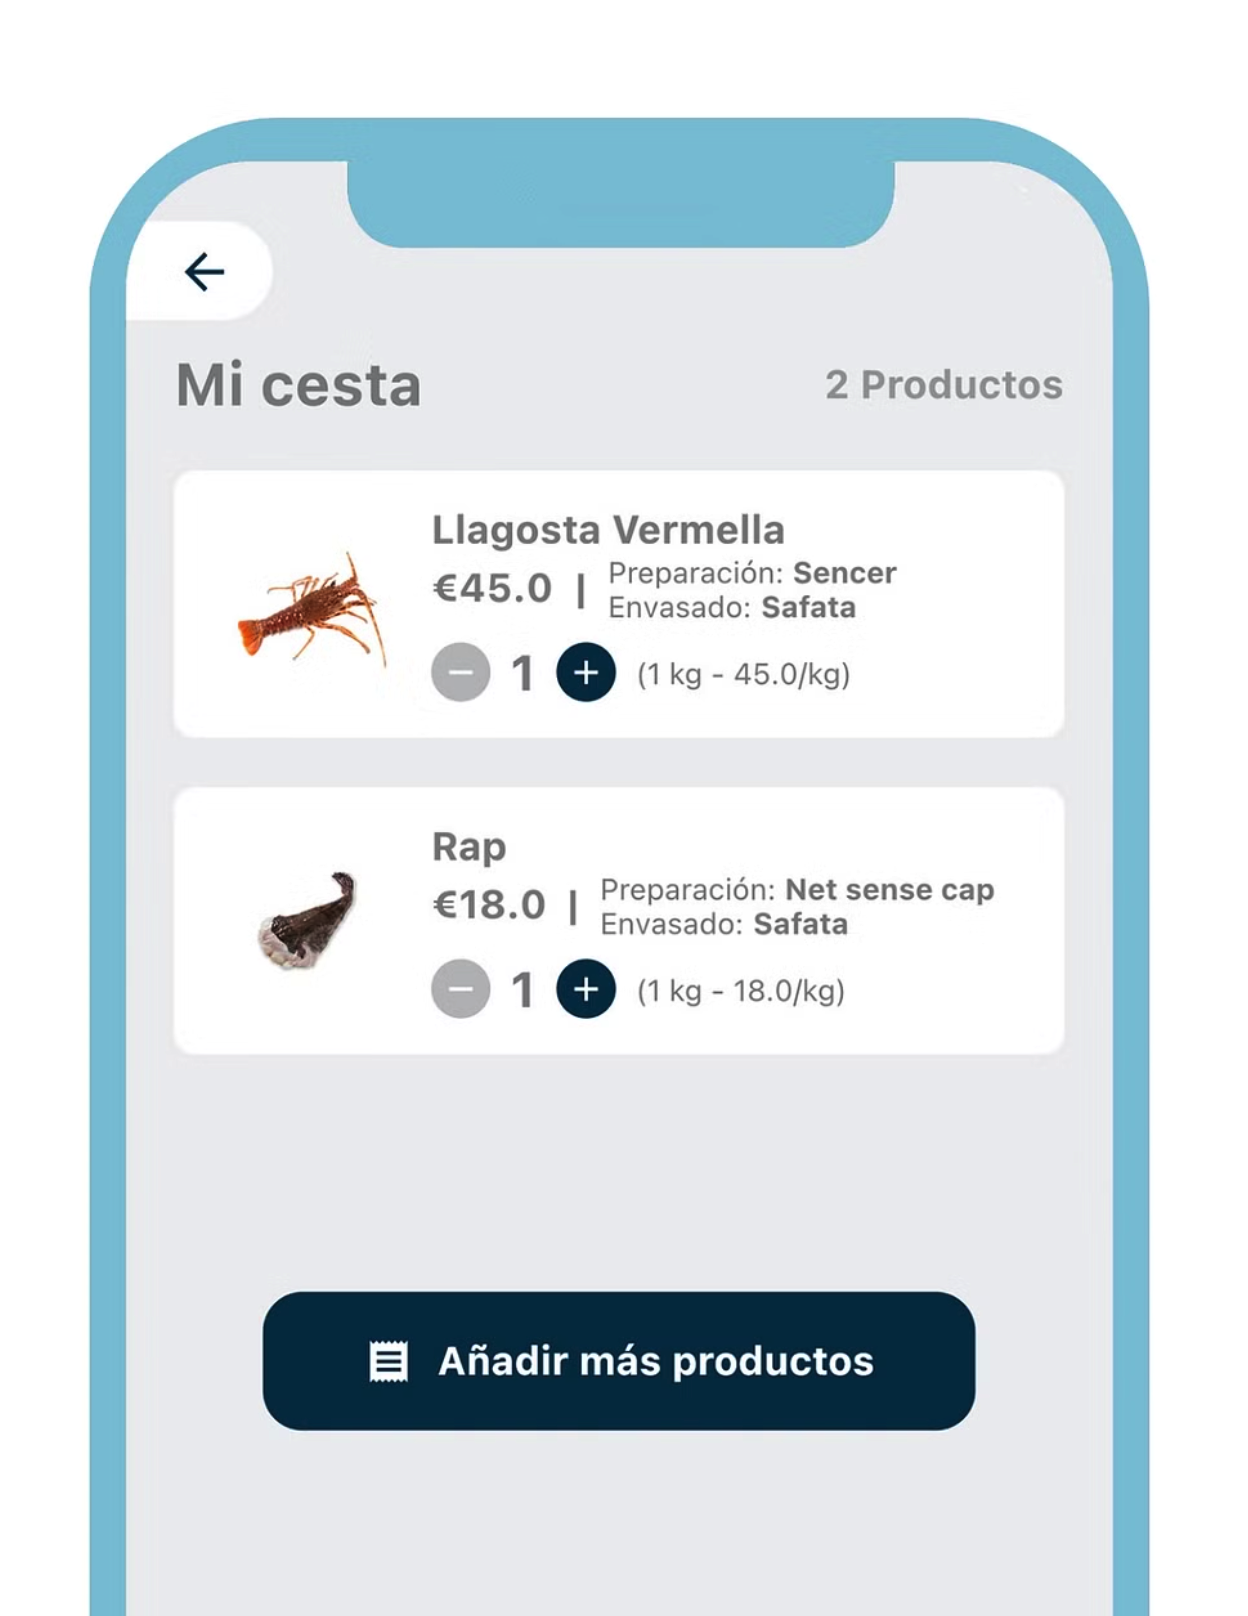 App venta pescado